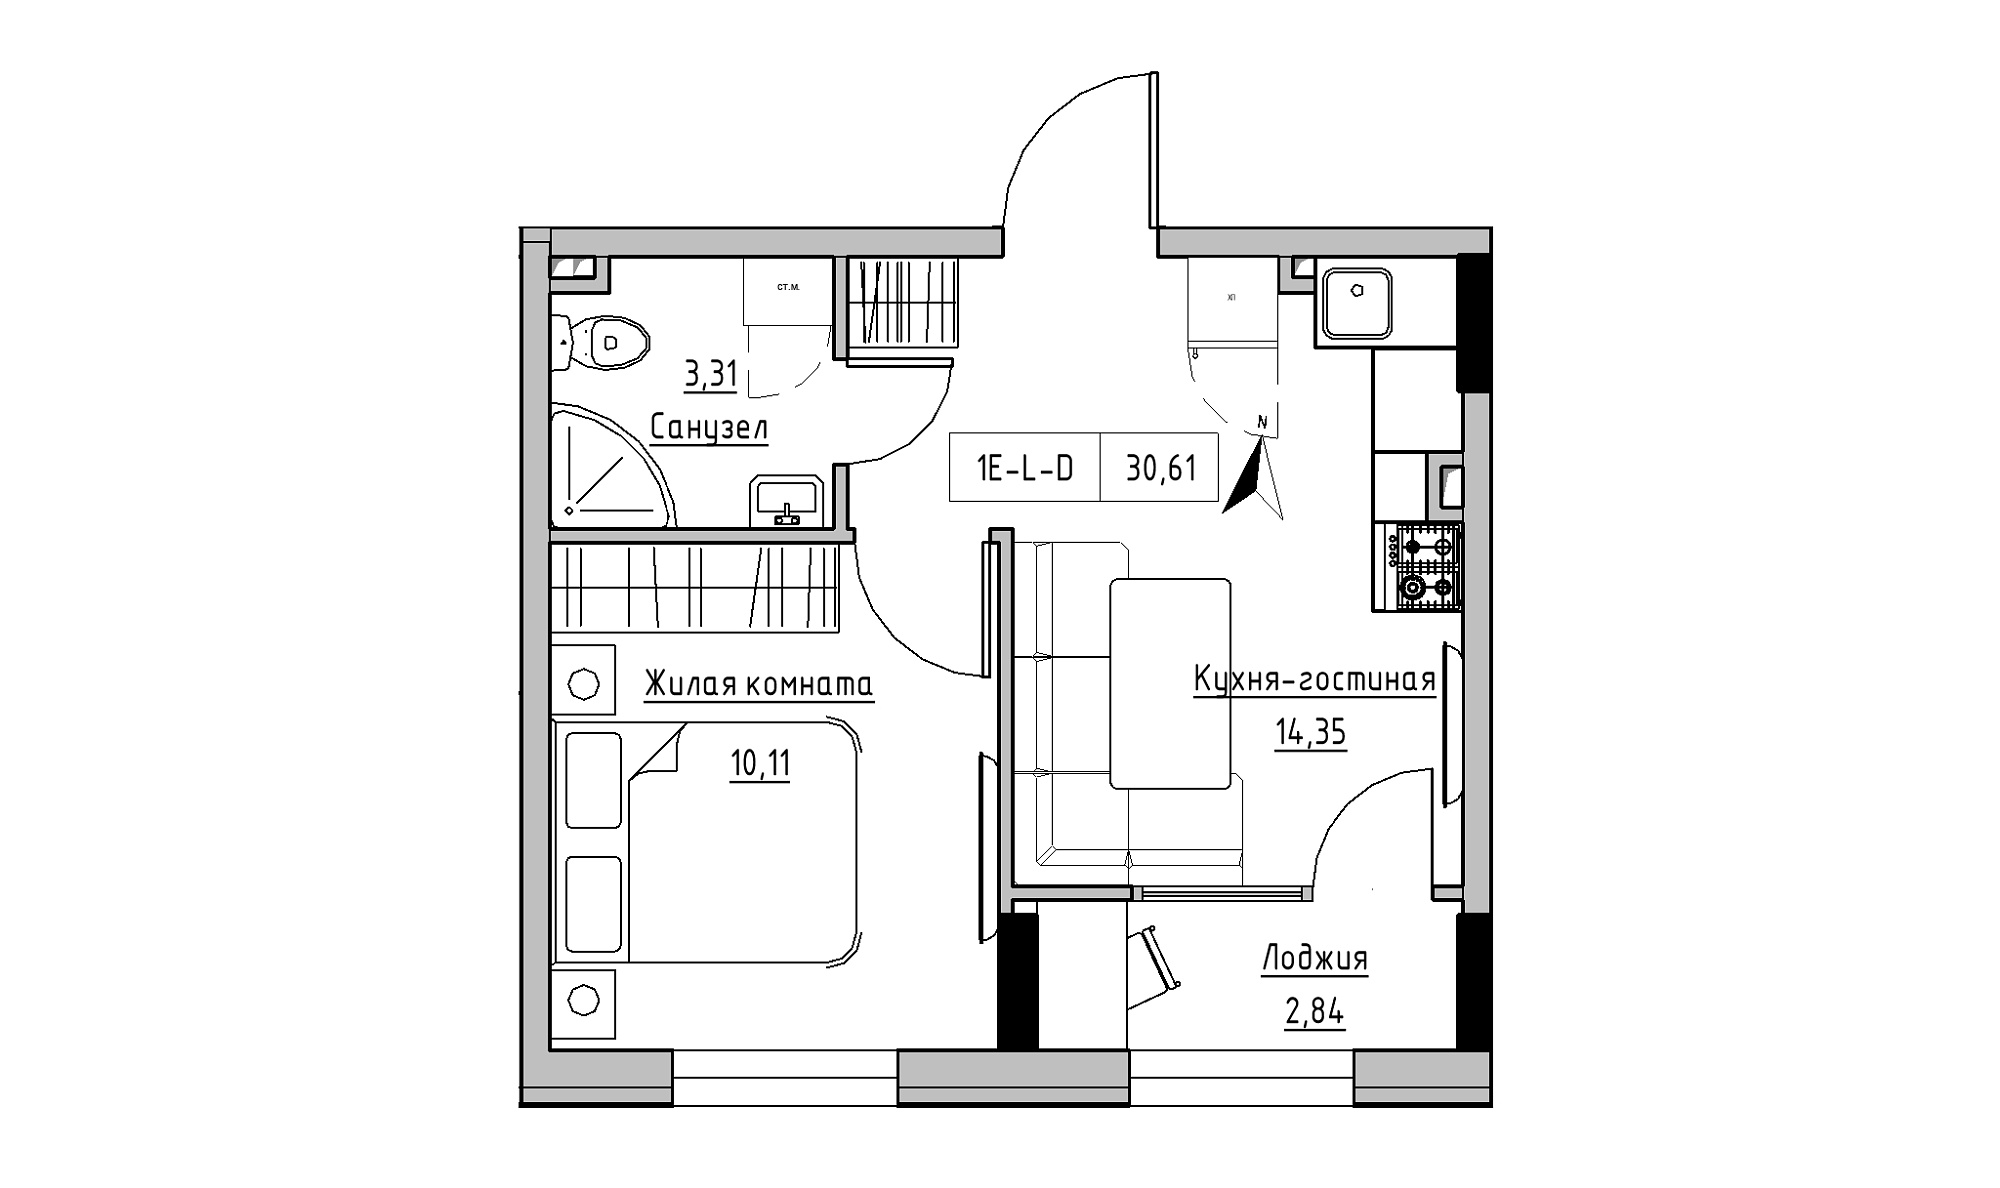 Planning 1-rm flats area 30.61m2, KS-025-01/0013.